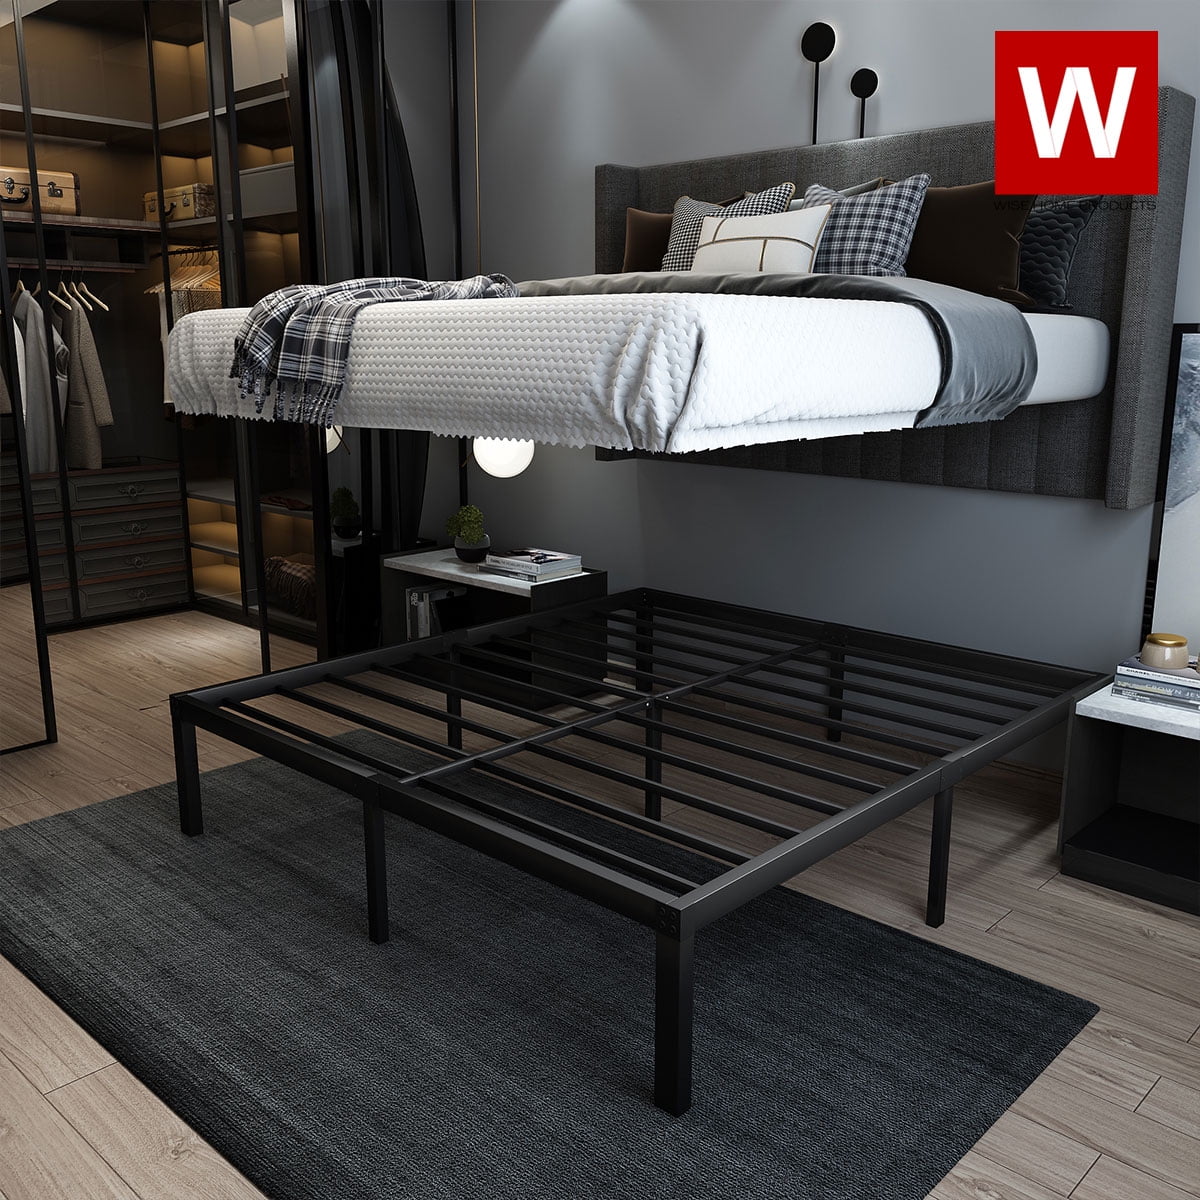 King Size Metal Platform Bed Frame With, King Pedestal Bed With Drawers